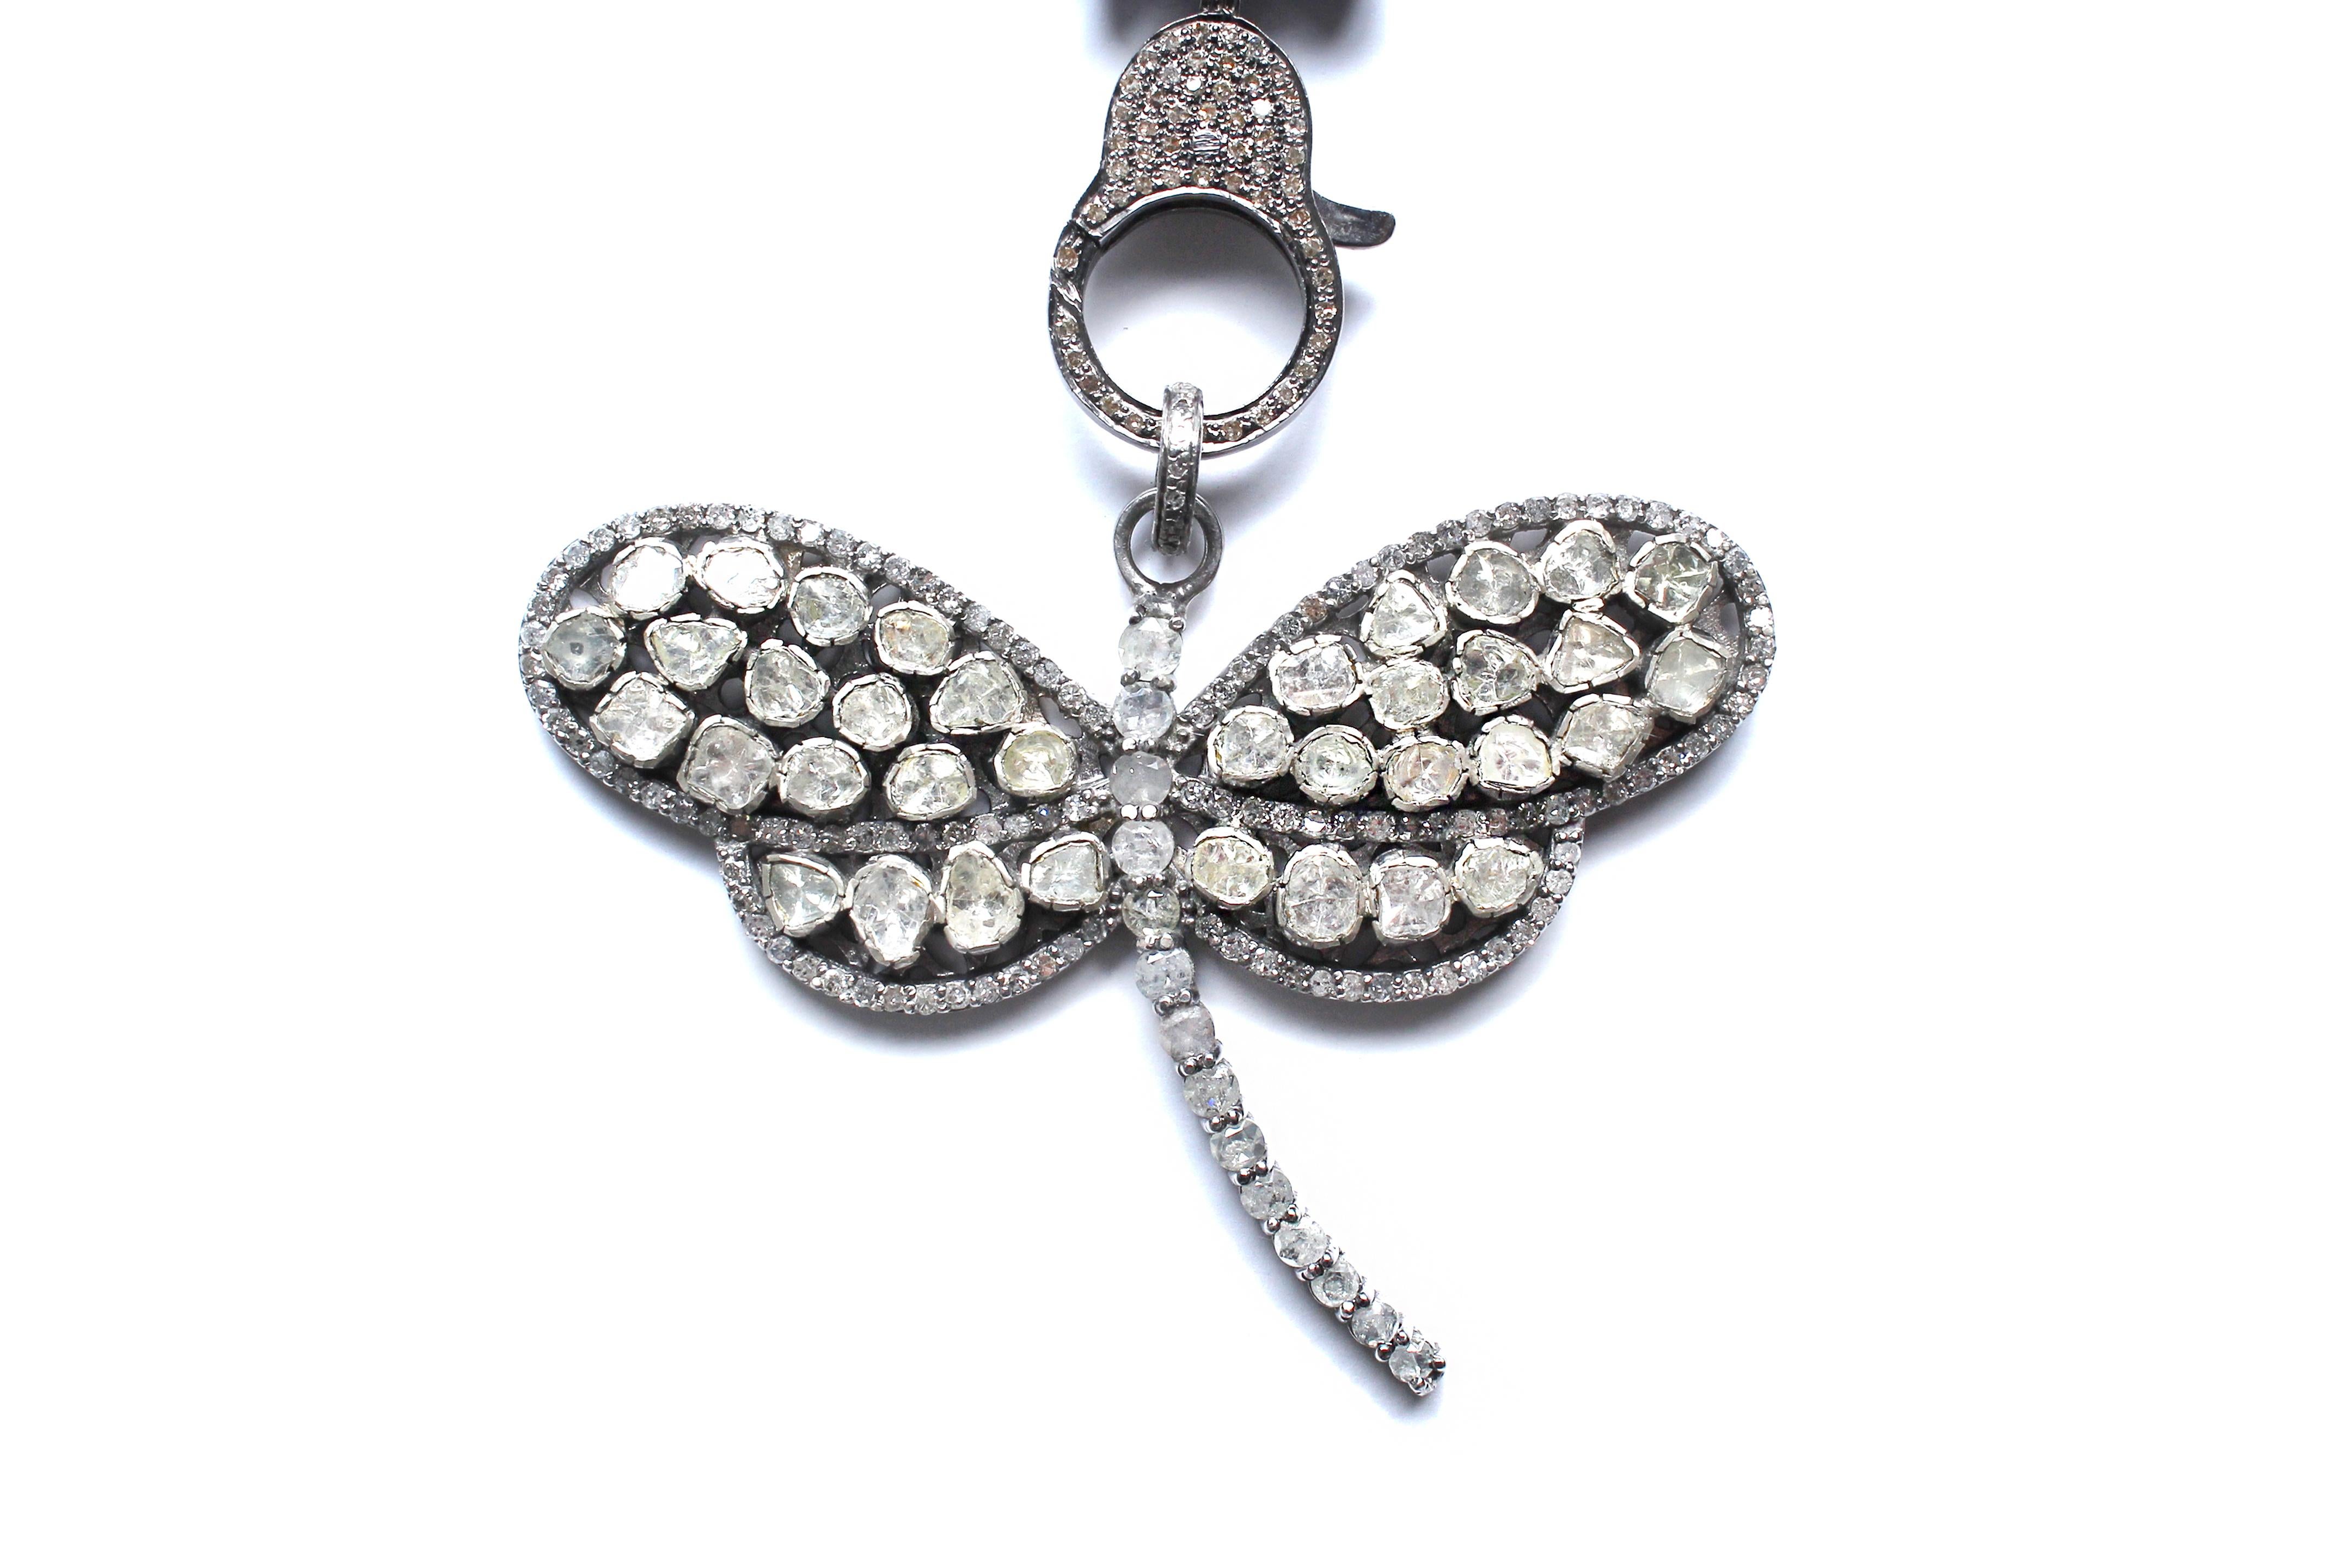 Contemporary Clarissa Bronfman Fine Cut Tanzanite, Sapphire, Diamond Firefly Beaded Necklace